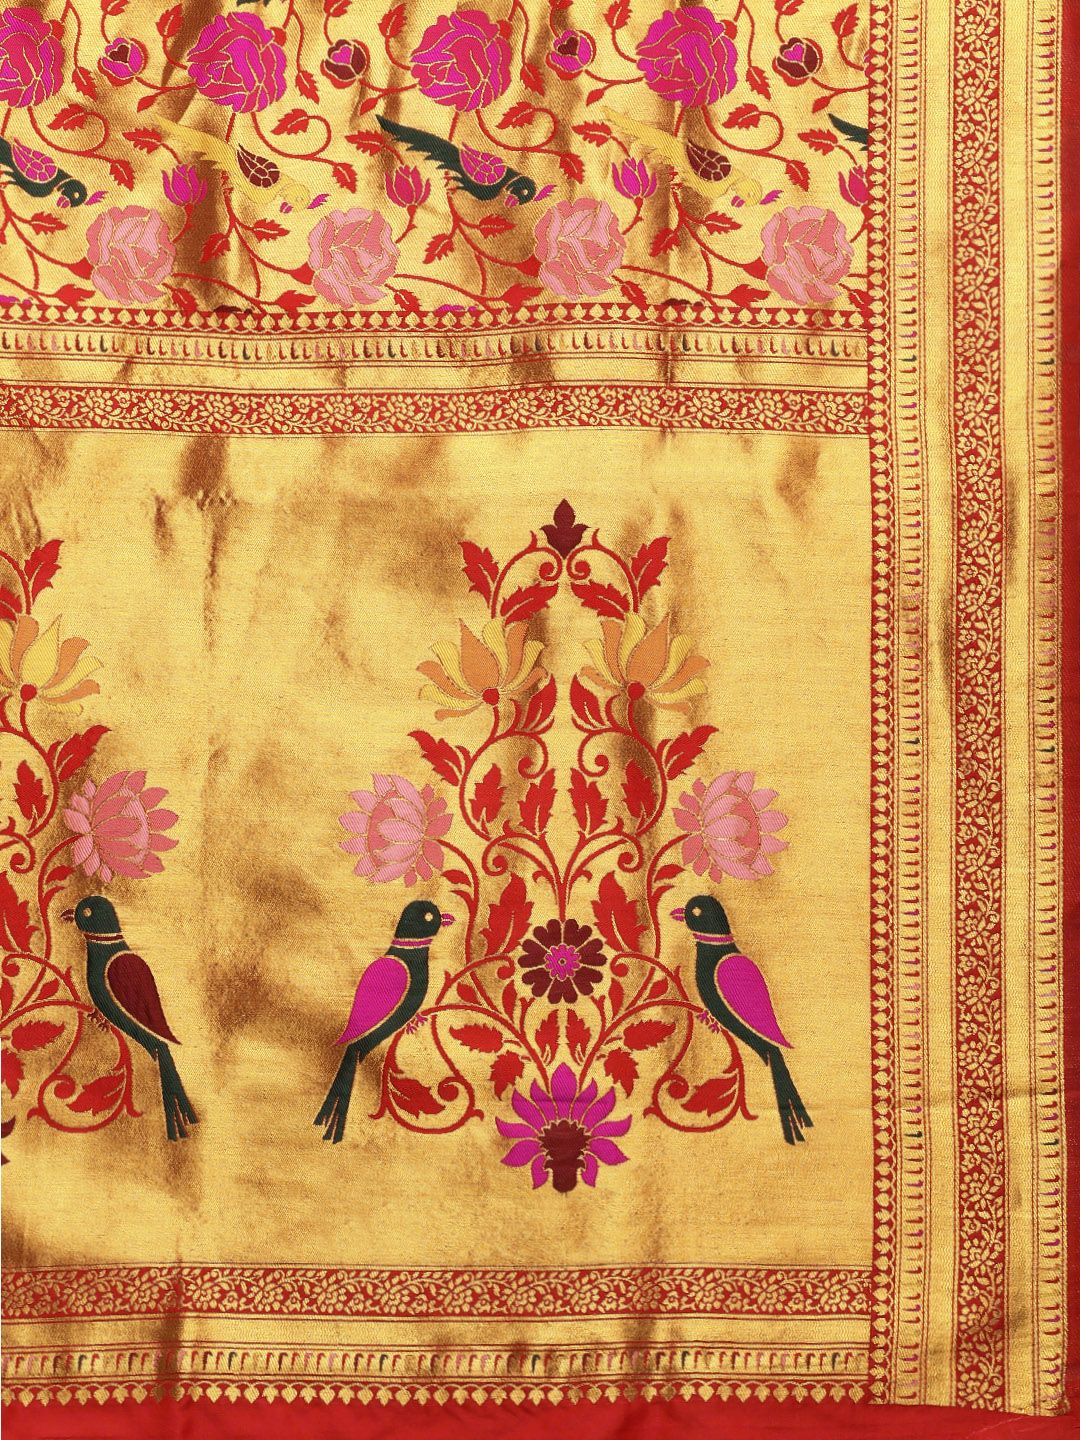 Red Color Pure Paithani Silk Saree-Latest Paithani Bollywood Collecton